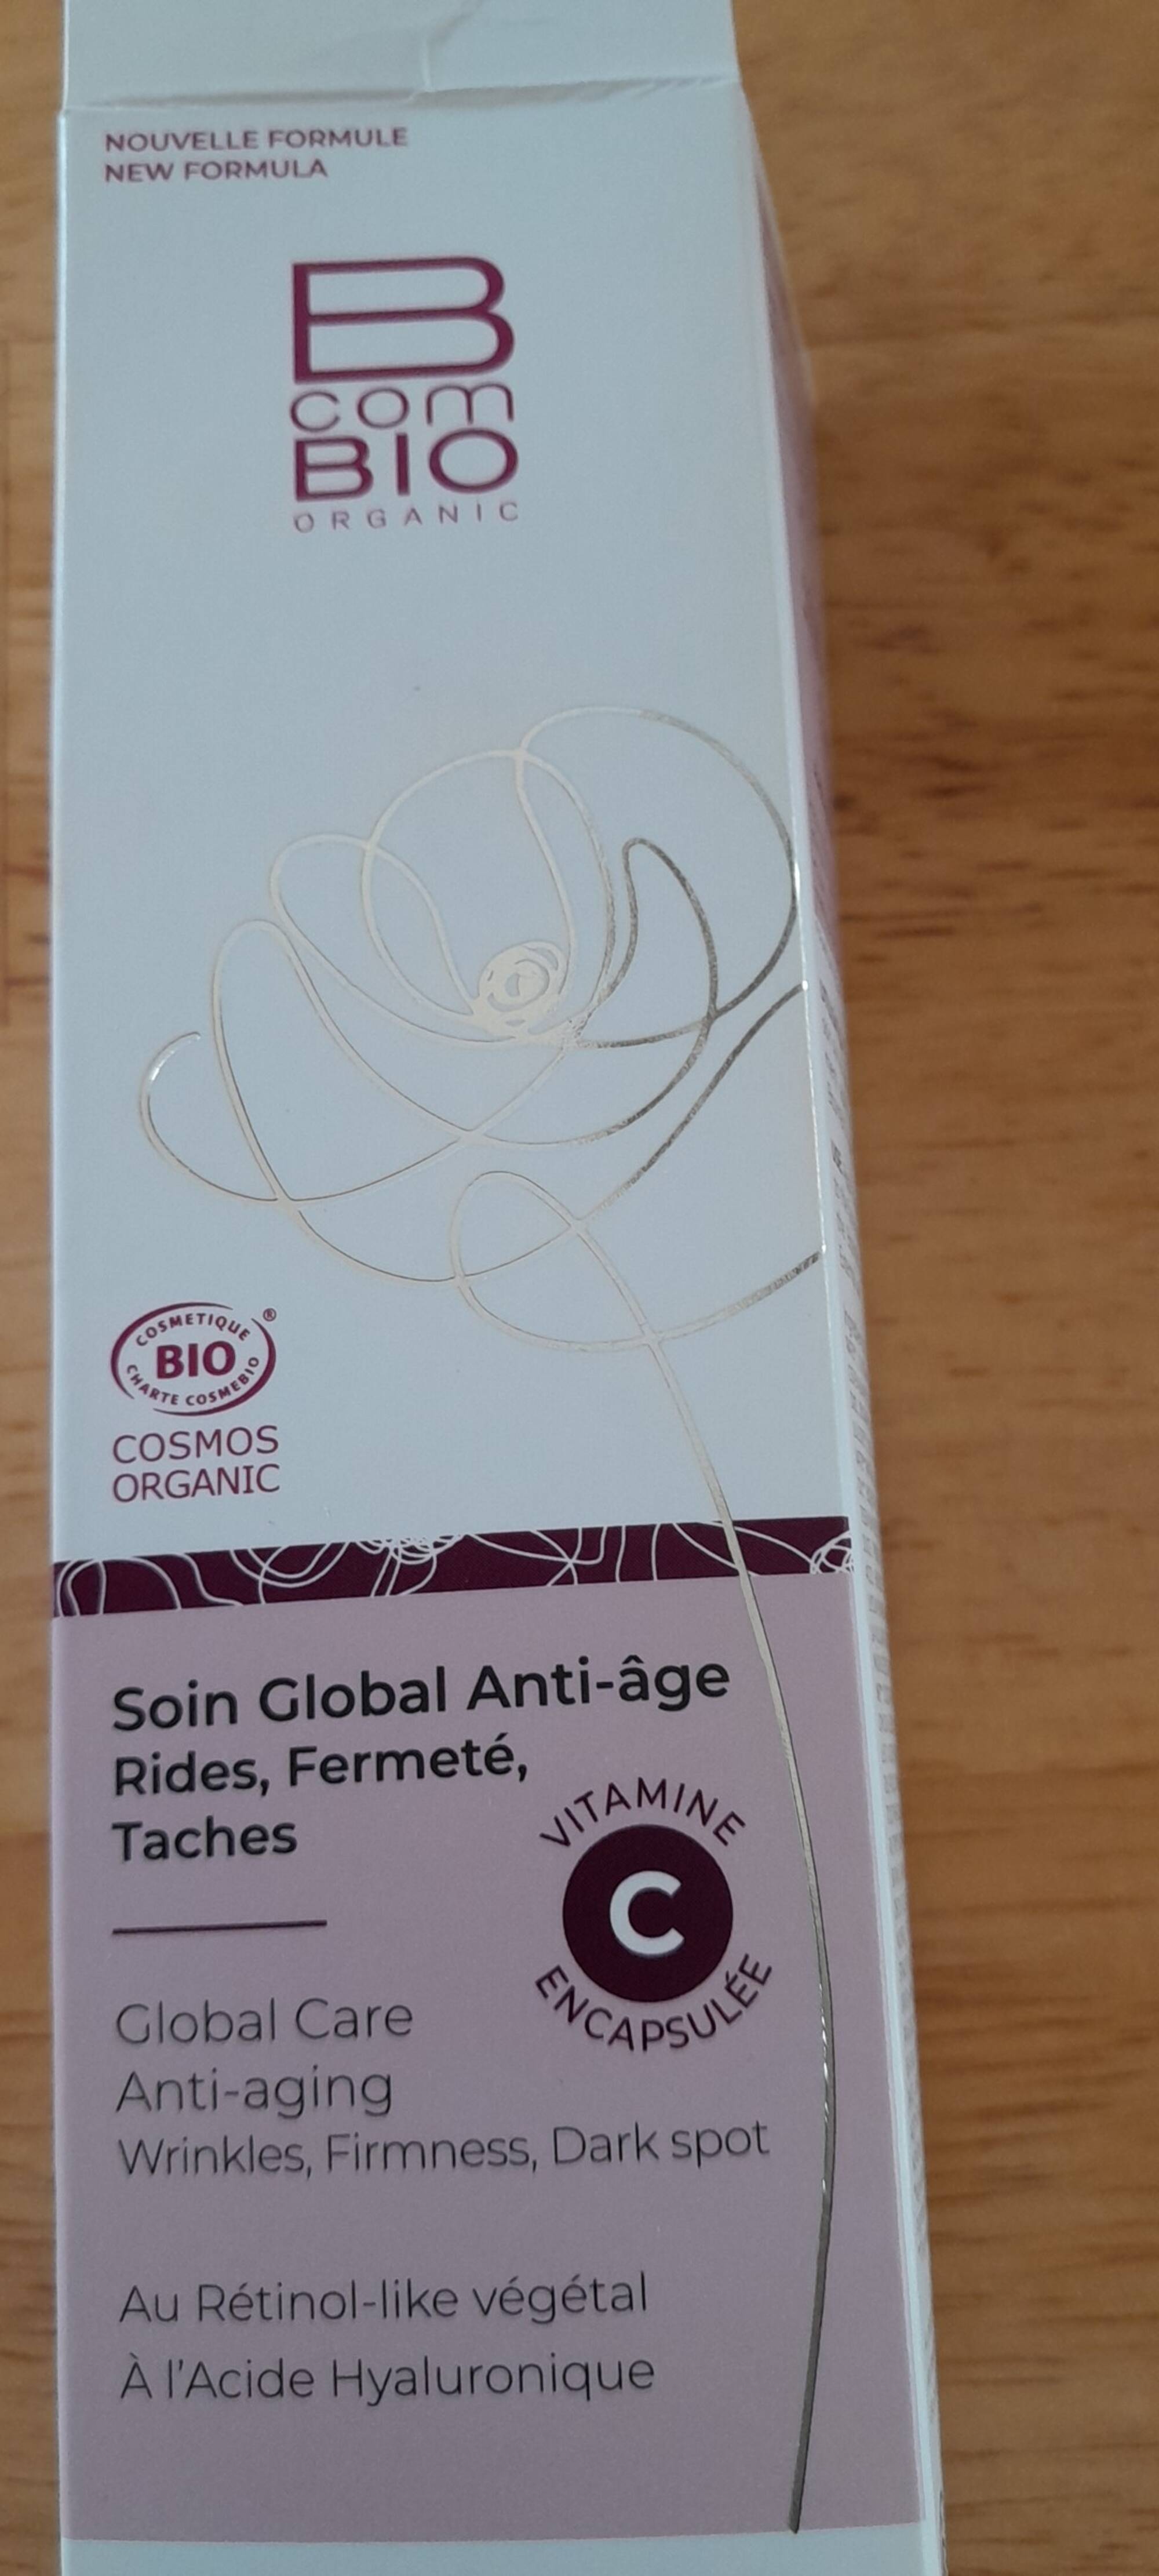 B COM BIO - Soin global anti-âge rides et fermeté